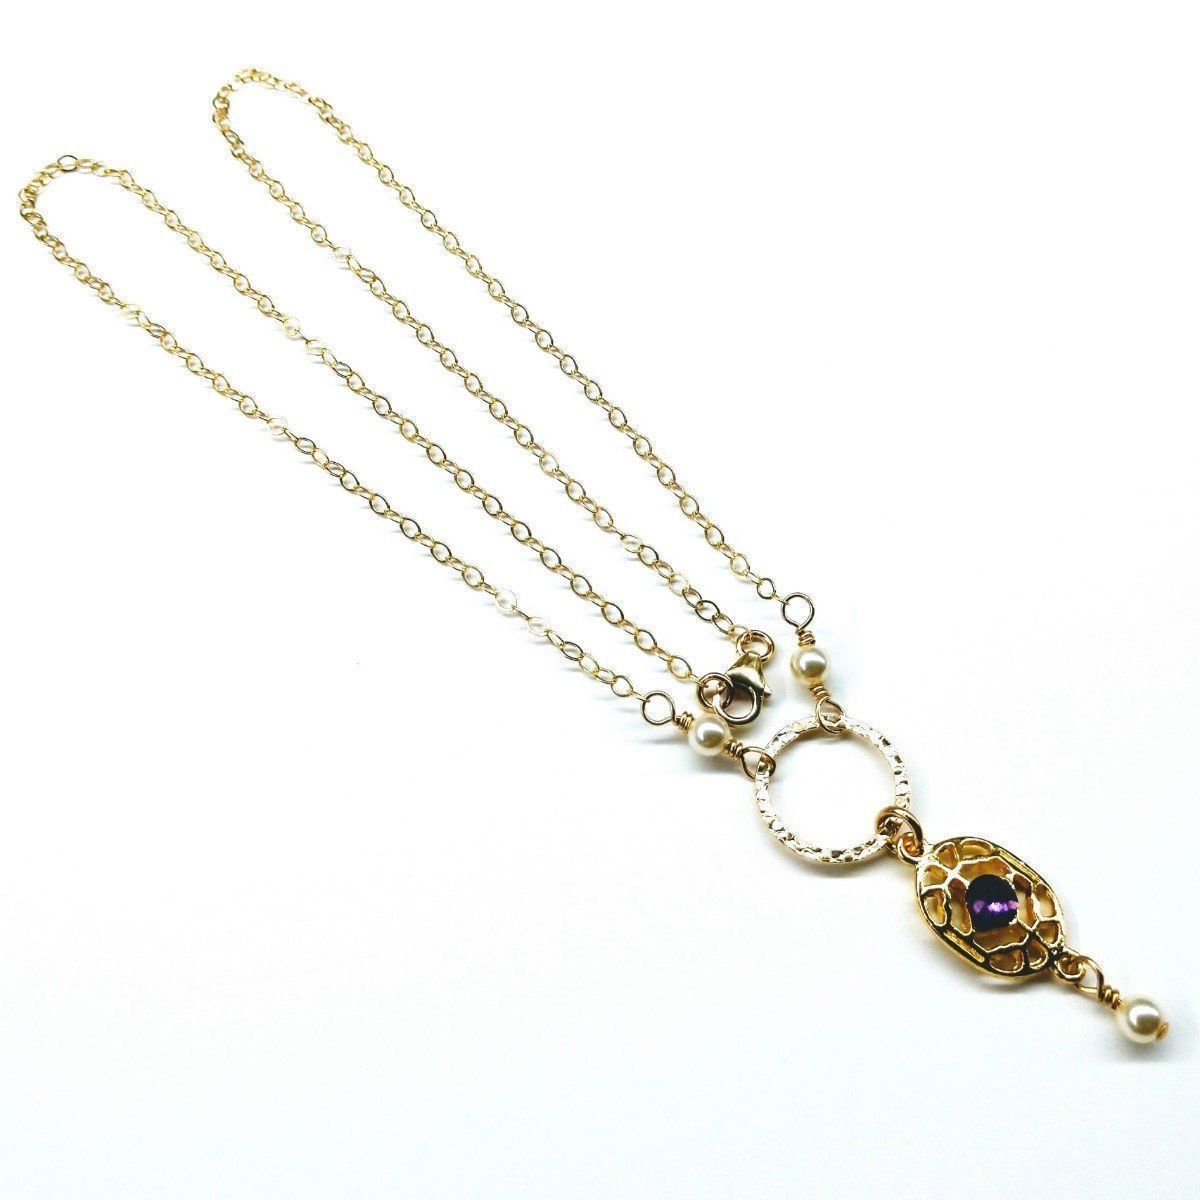 Handcrafted Gold Filled Purple Crystal Circle Necklace - Swarovski Pearls & Amethyst Shimmer Crystal - 18" Length - Necklaces - Bijou Her -  -  - 